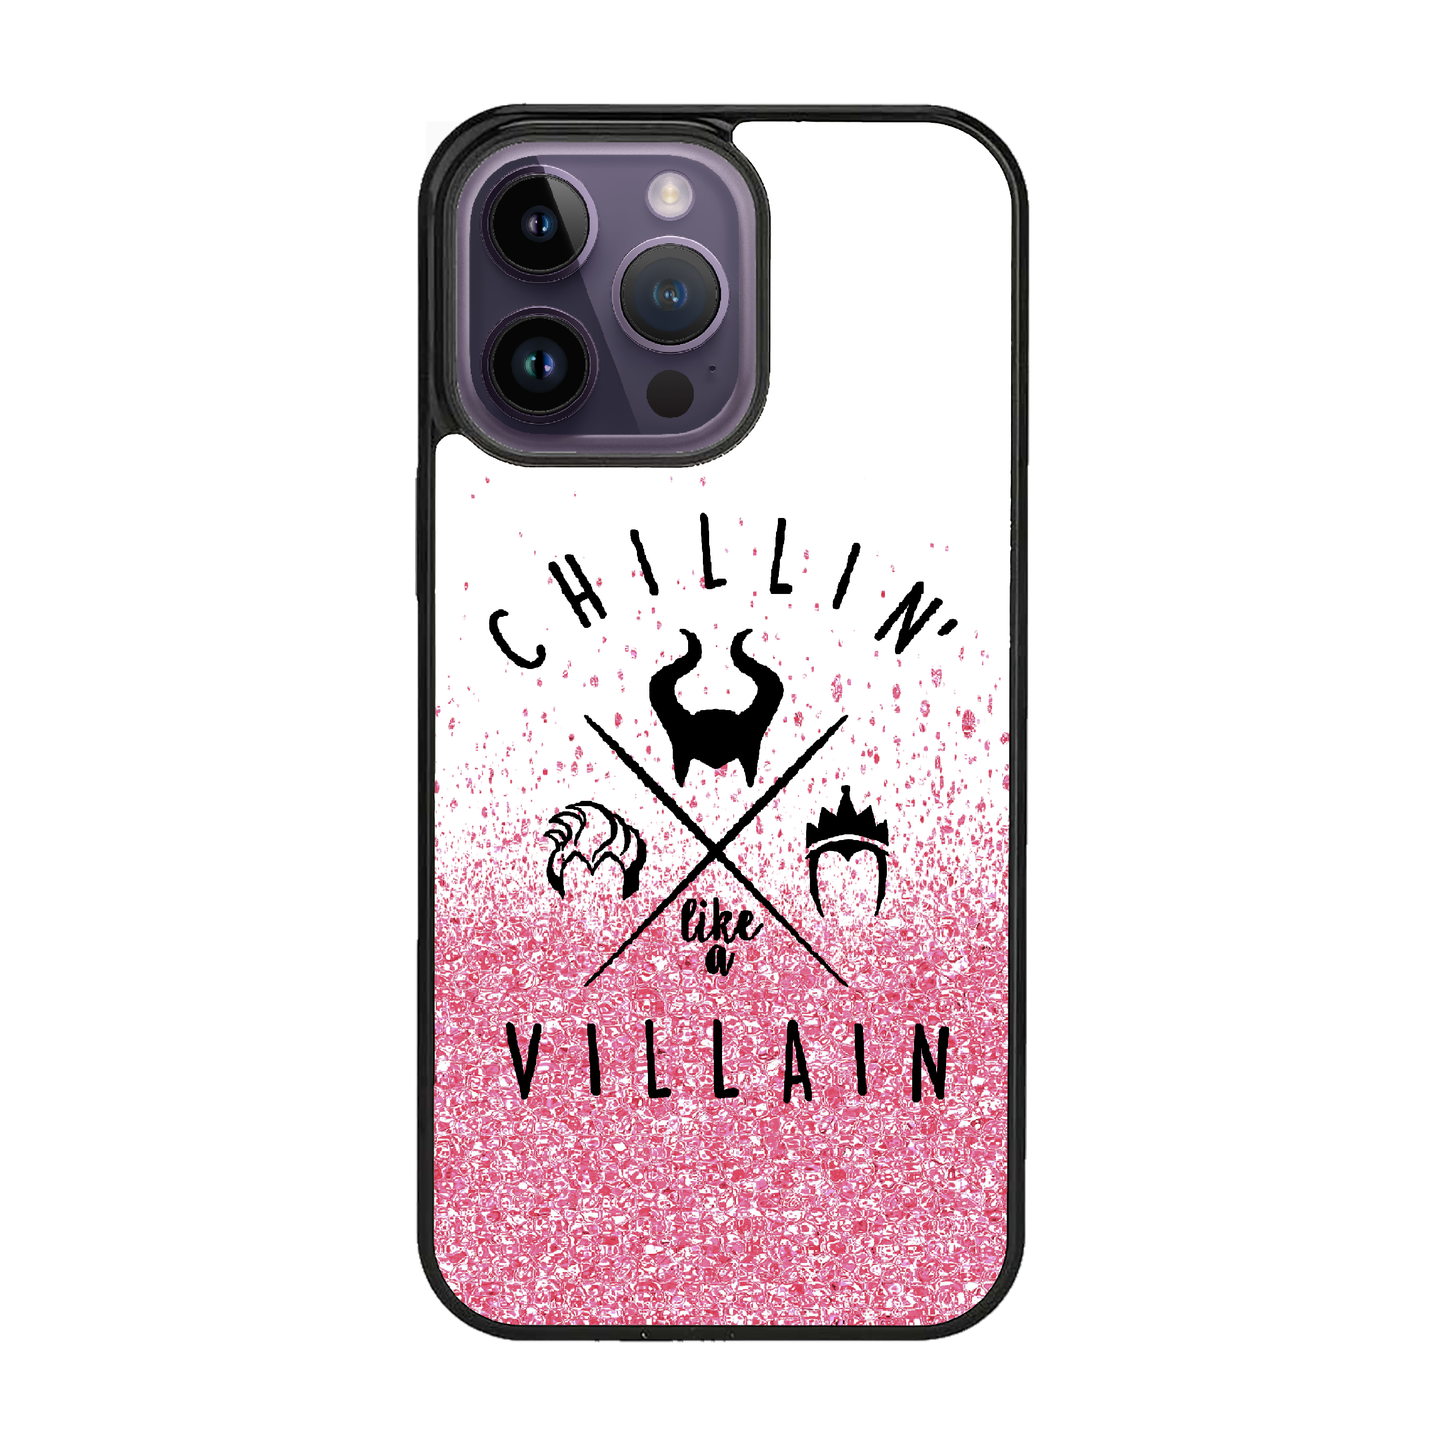 Chillin like a Villain iPhone Galaxy Slim Case